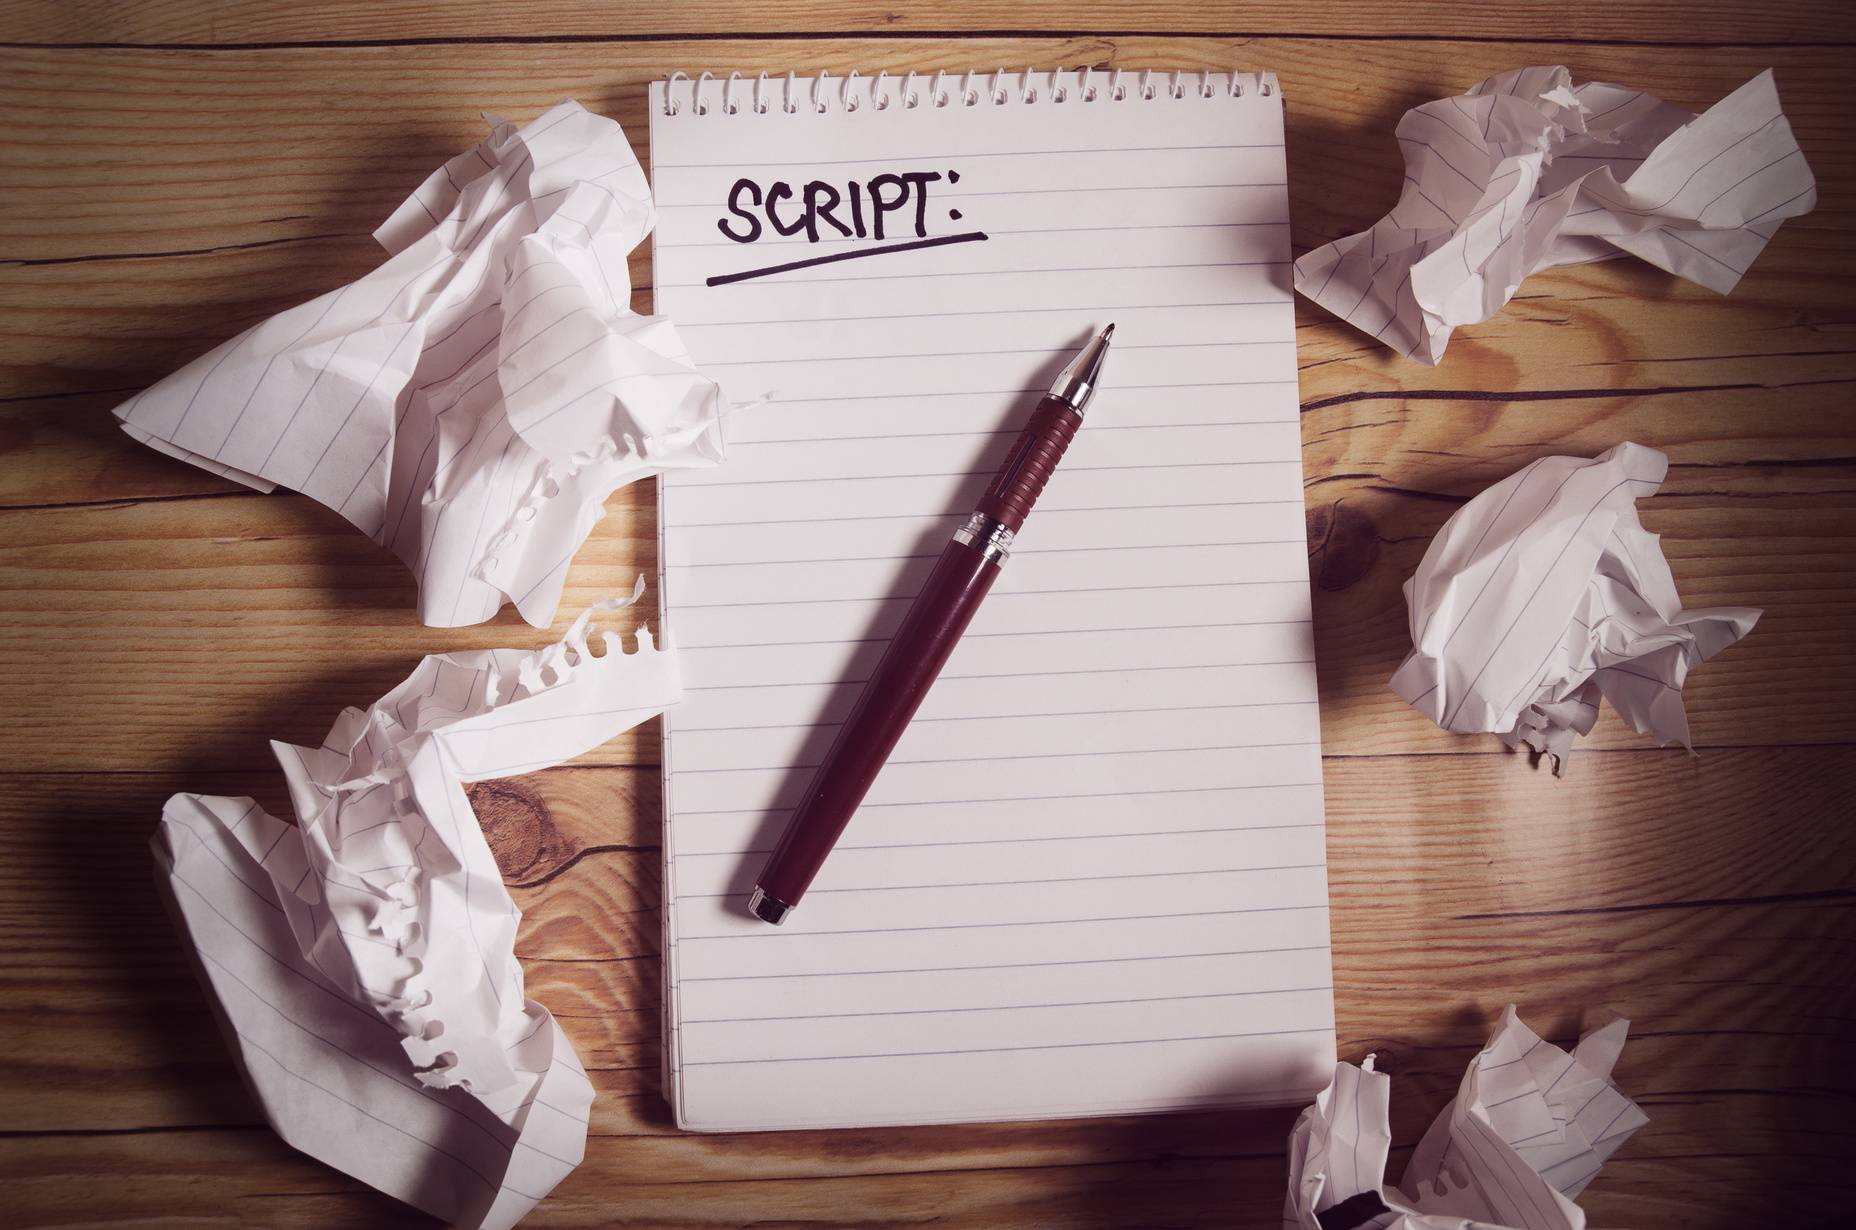 Script writer's notebook